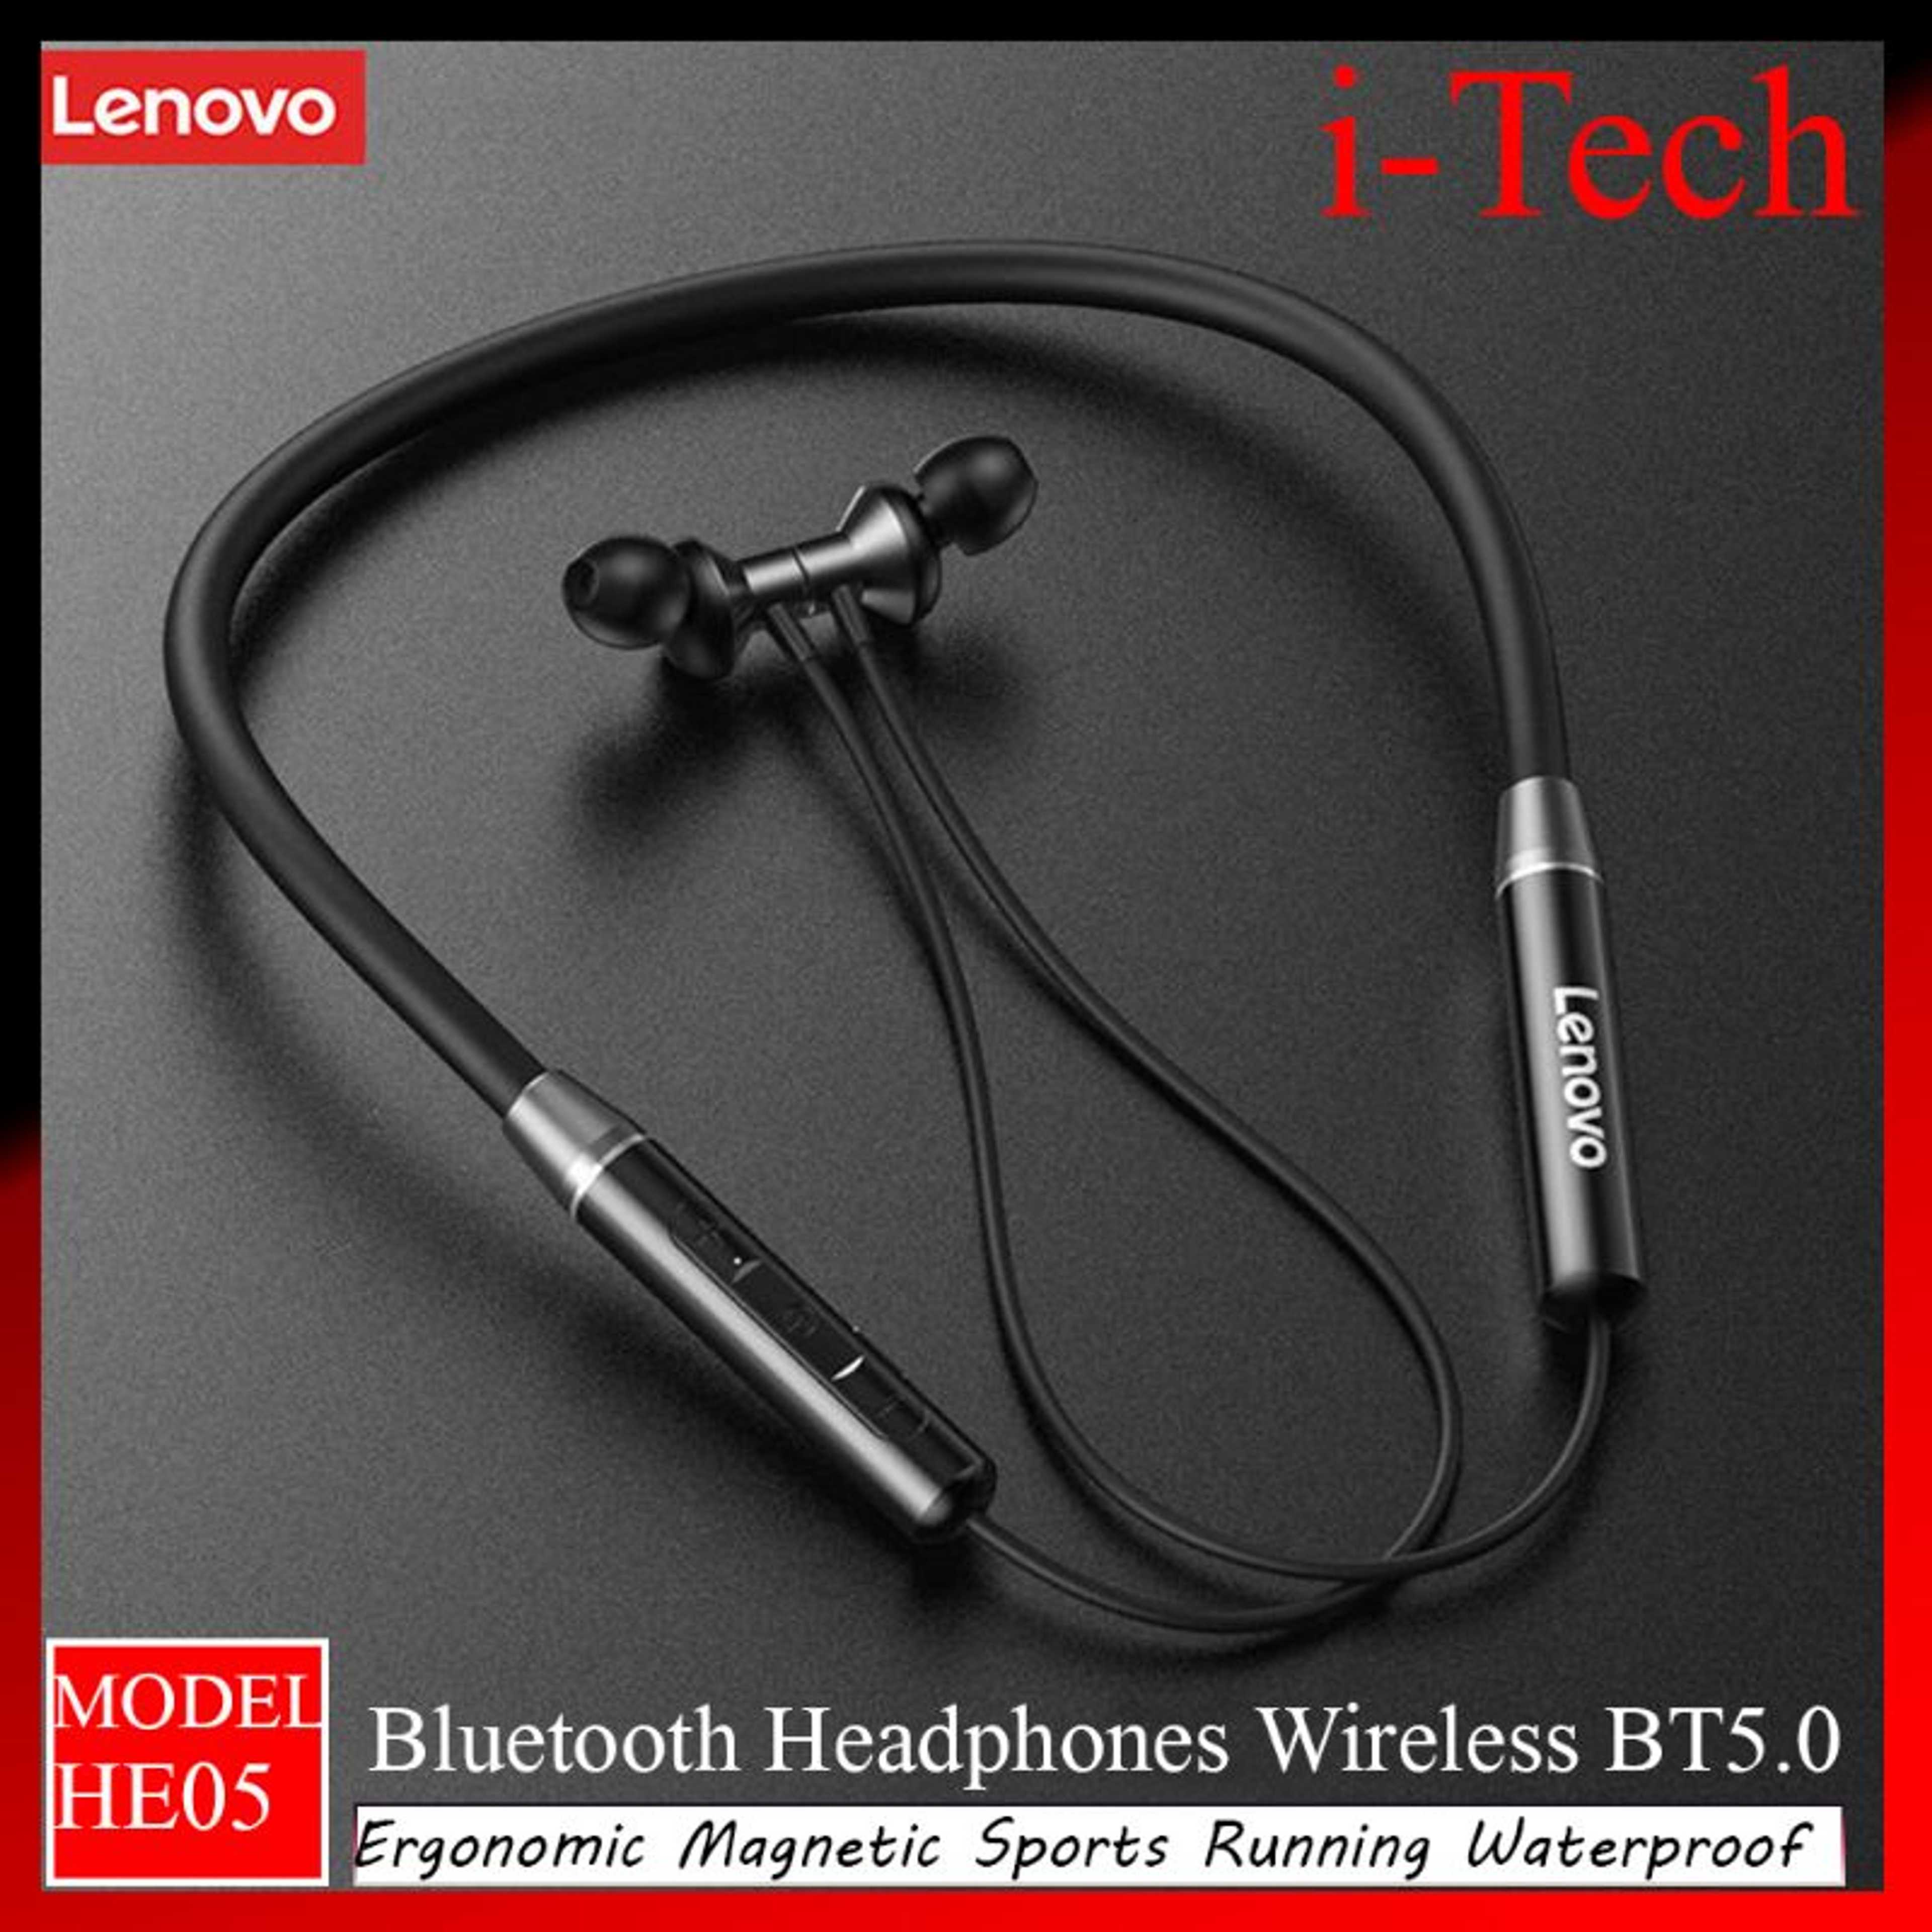 Lenovo HE05 Bluetooth Headphones Wireless BT5.0 Ergonomic Magnetic Sports Running Waterproof Earphones Noise Canceling IDEAL ON MOTORBIKES